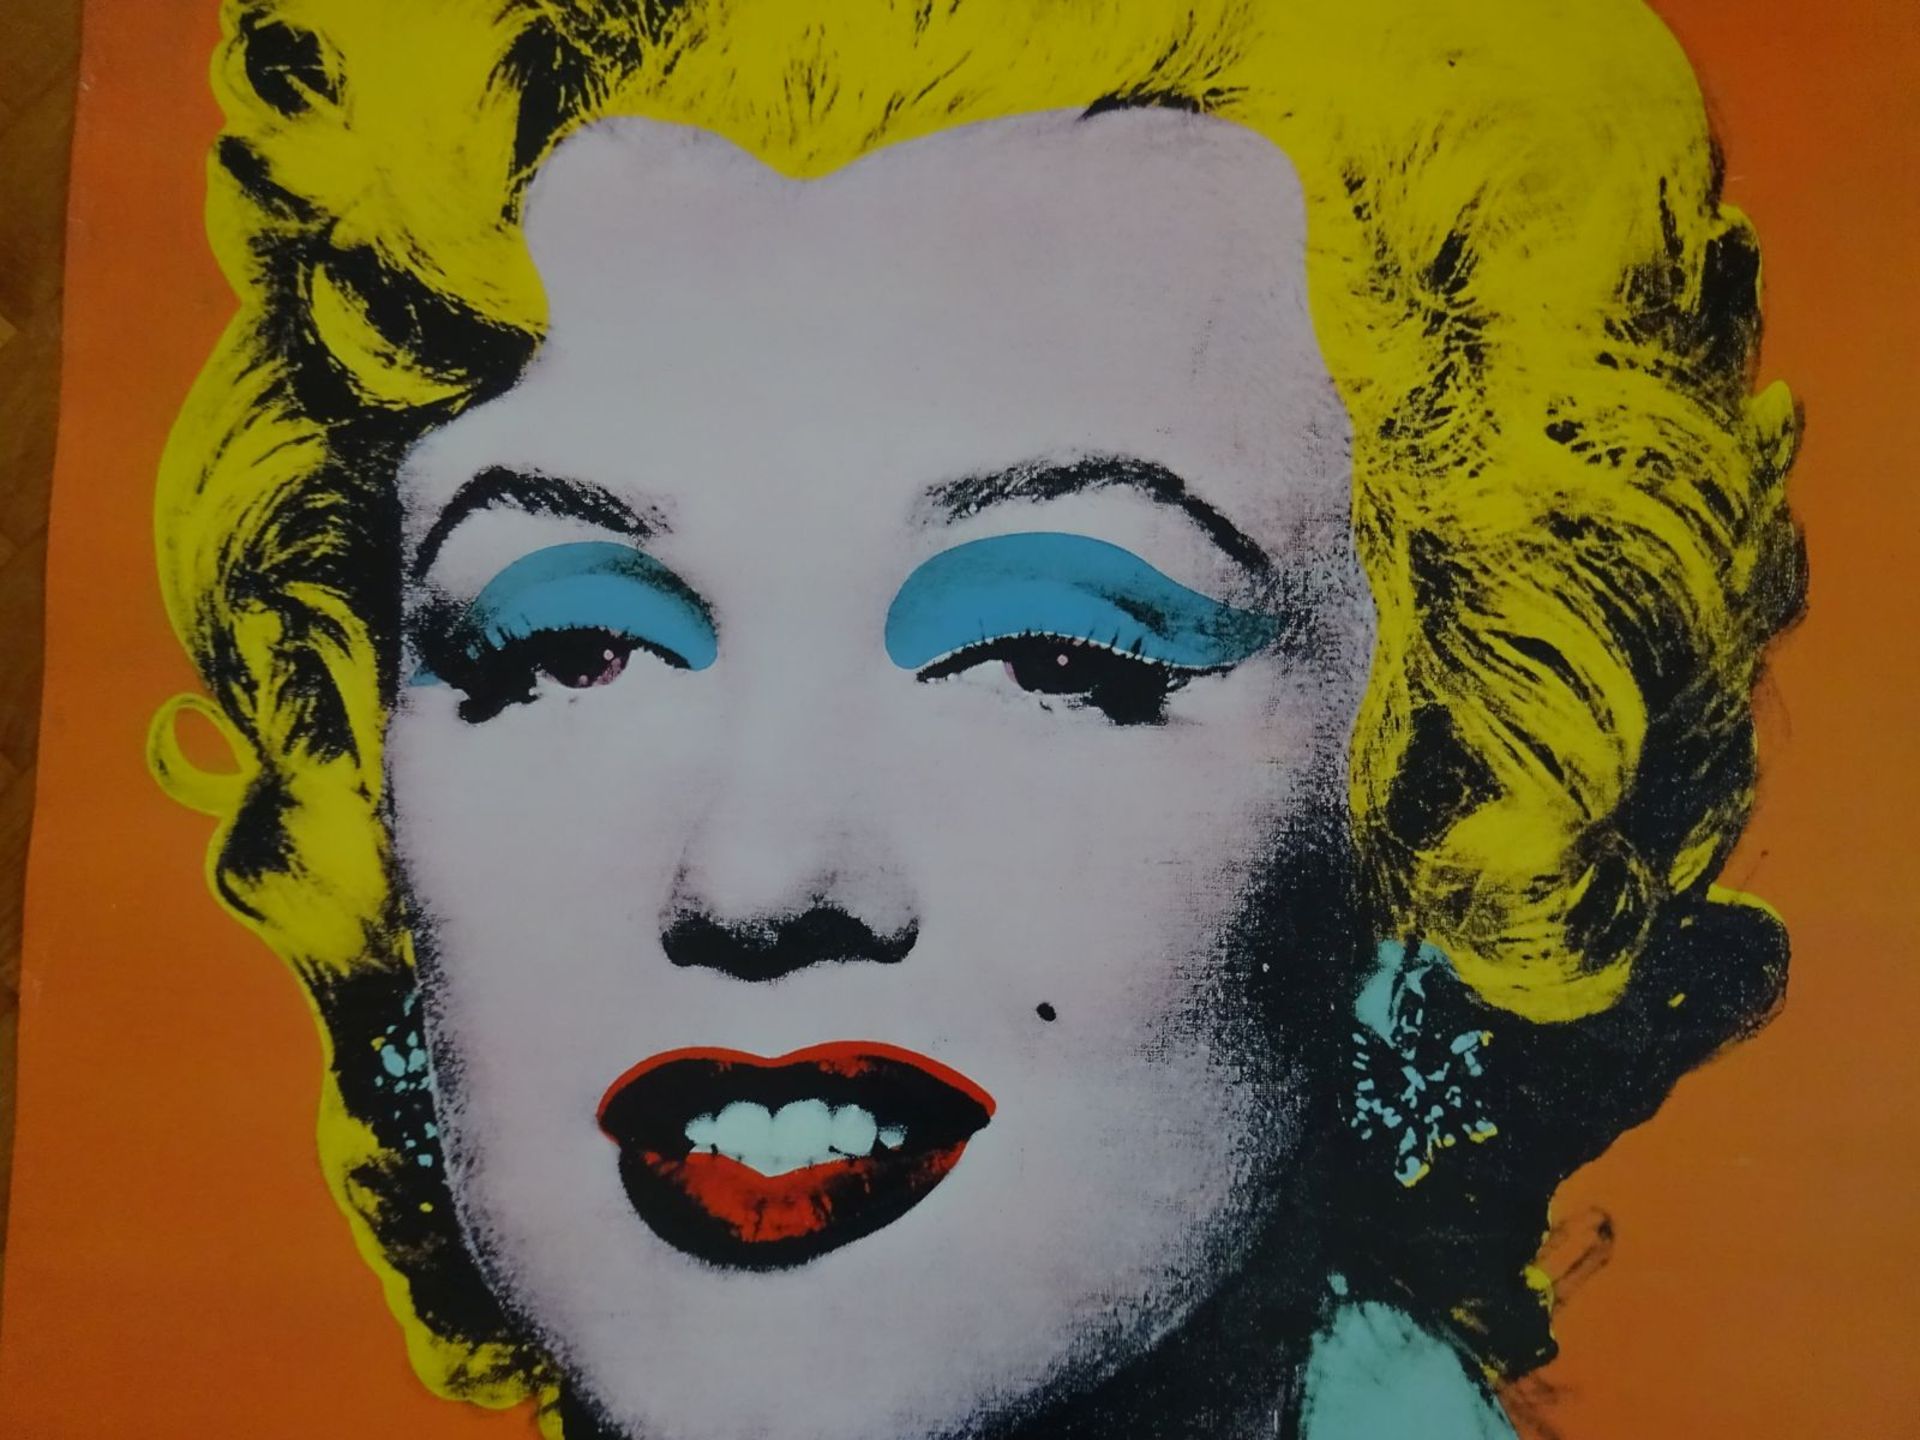 Warhol - Orange Marylin